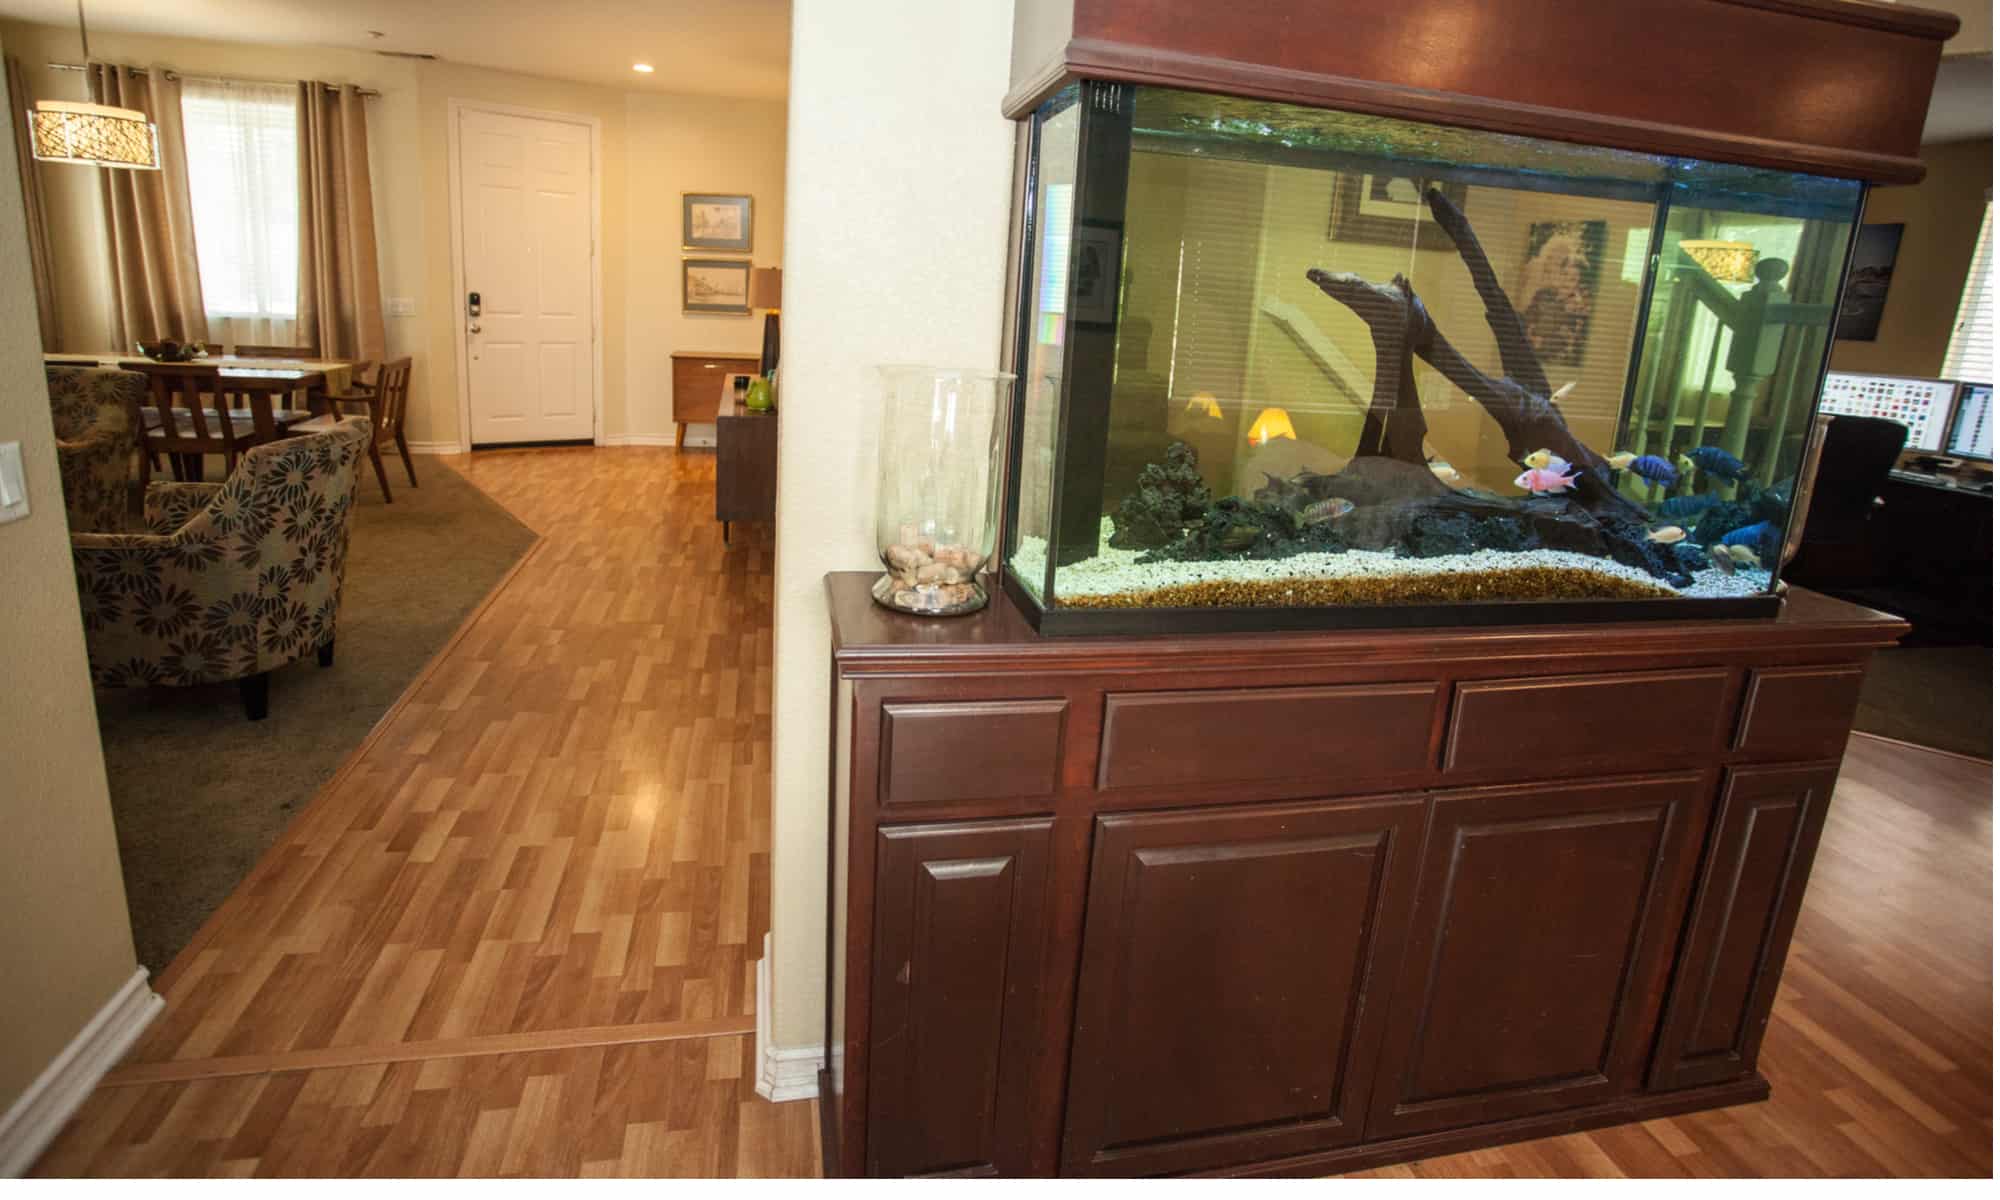 Can I put an aquarium on a cabinet?